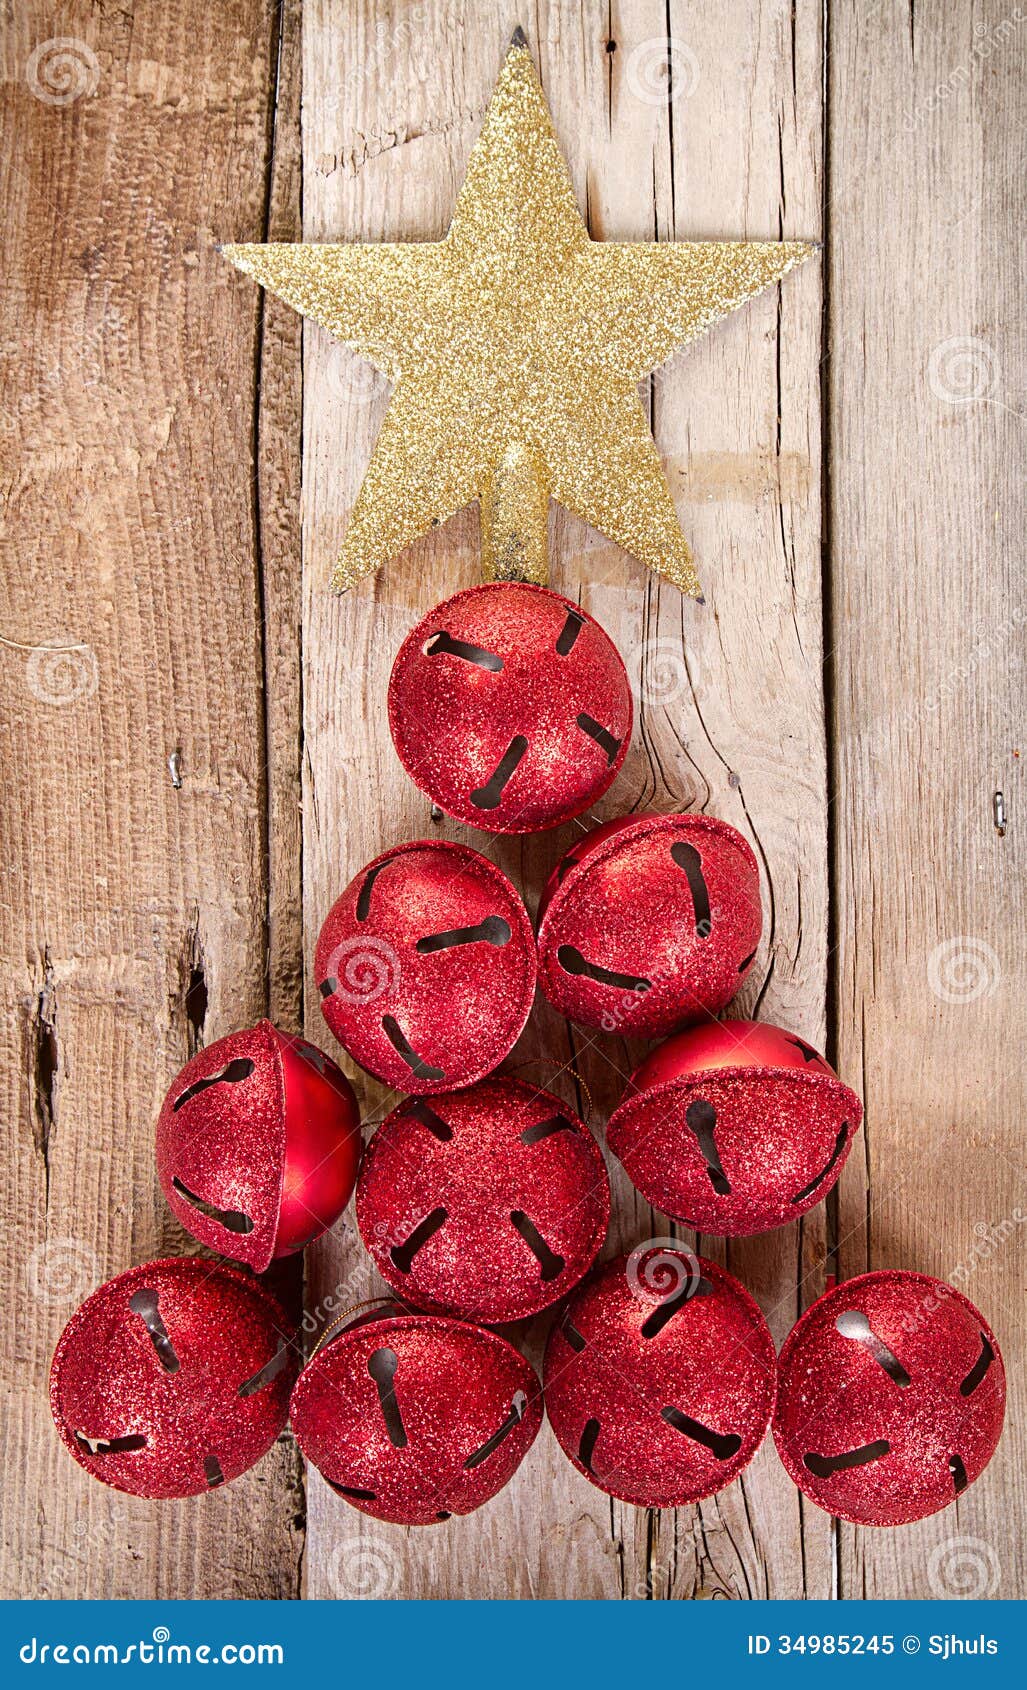 Christmas Jingle Bells And Star Shaped Like A Christmas Tree Stock Image - Image of background ...